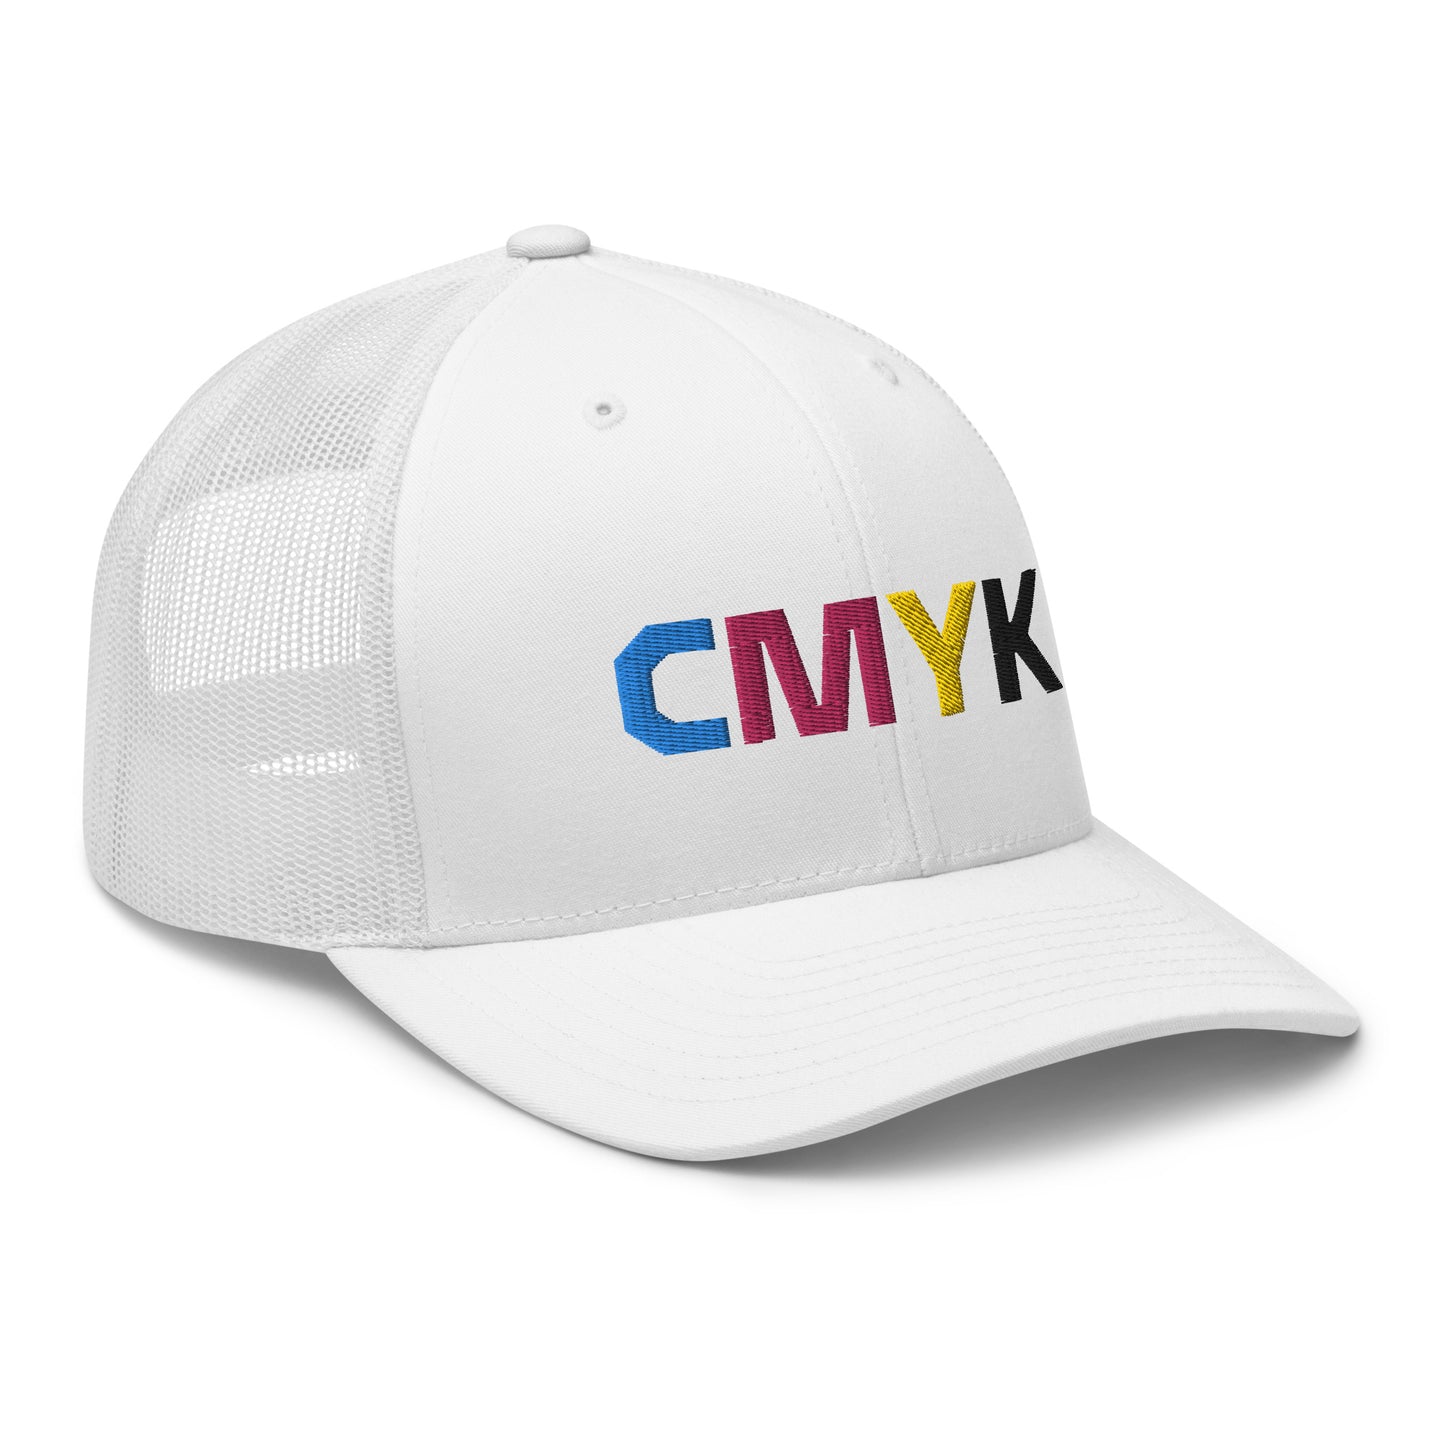 CMYK Embroidered Trucker Cap